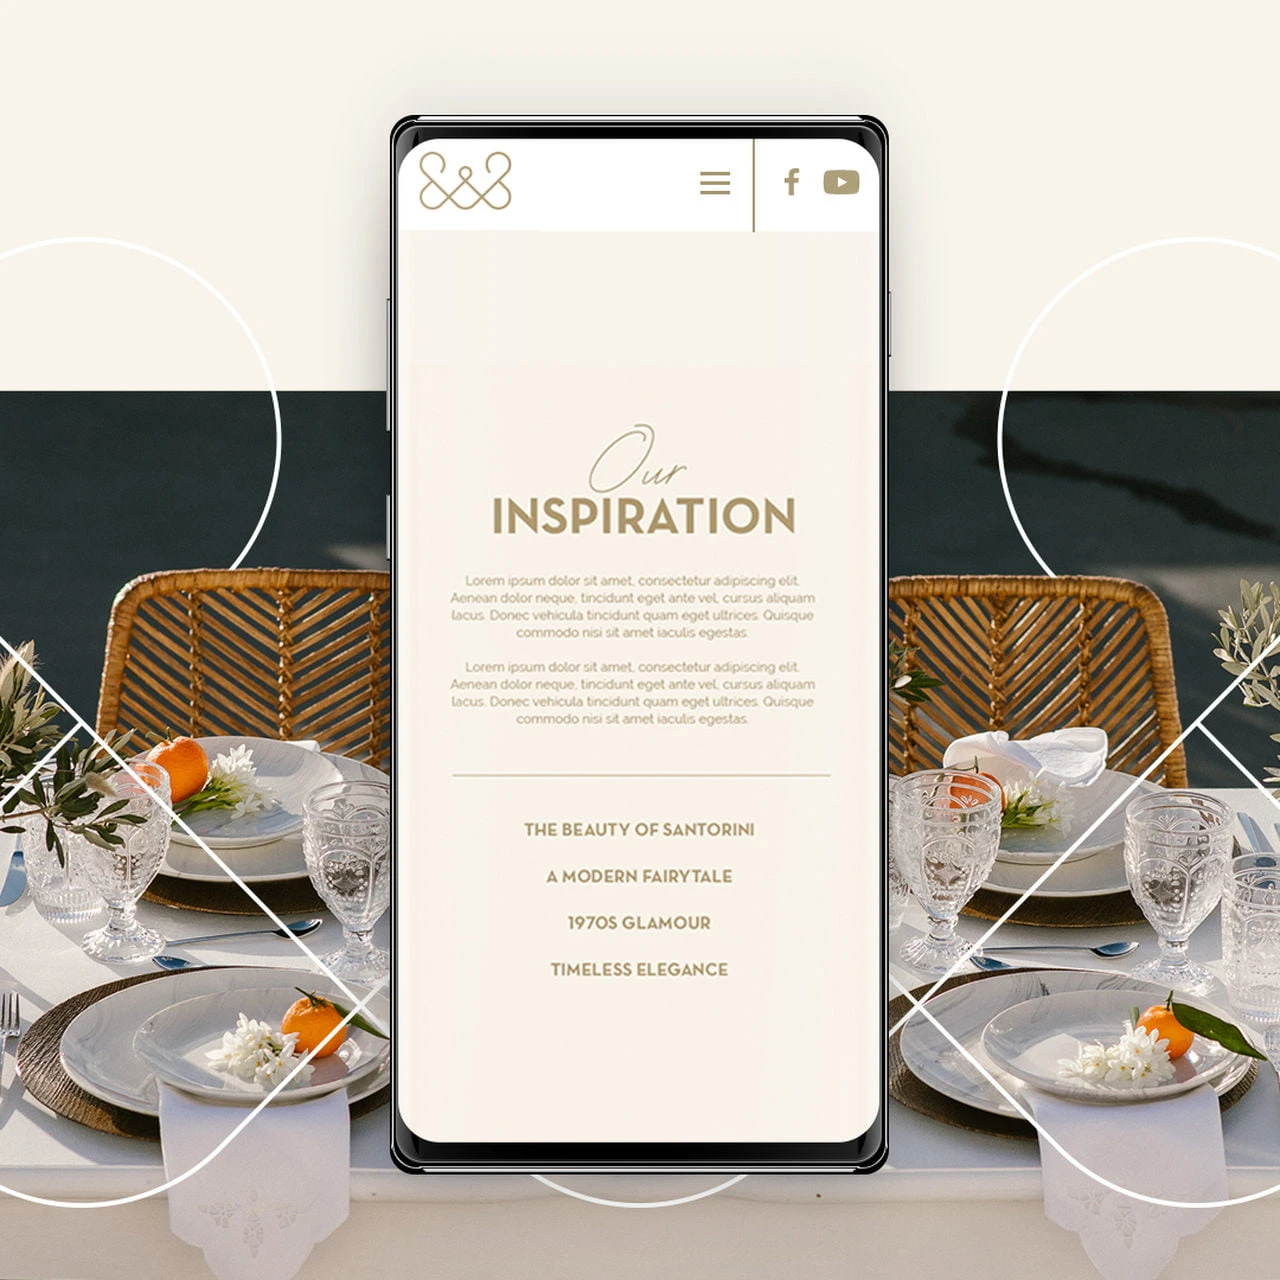 Custom σχεδίαση και Κατασκευή Ιστοσελίδας - Wedding Wish - Artware